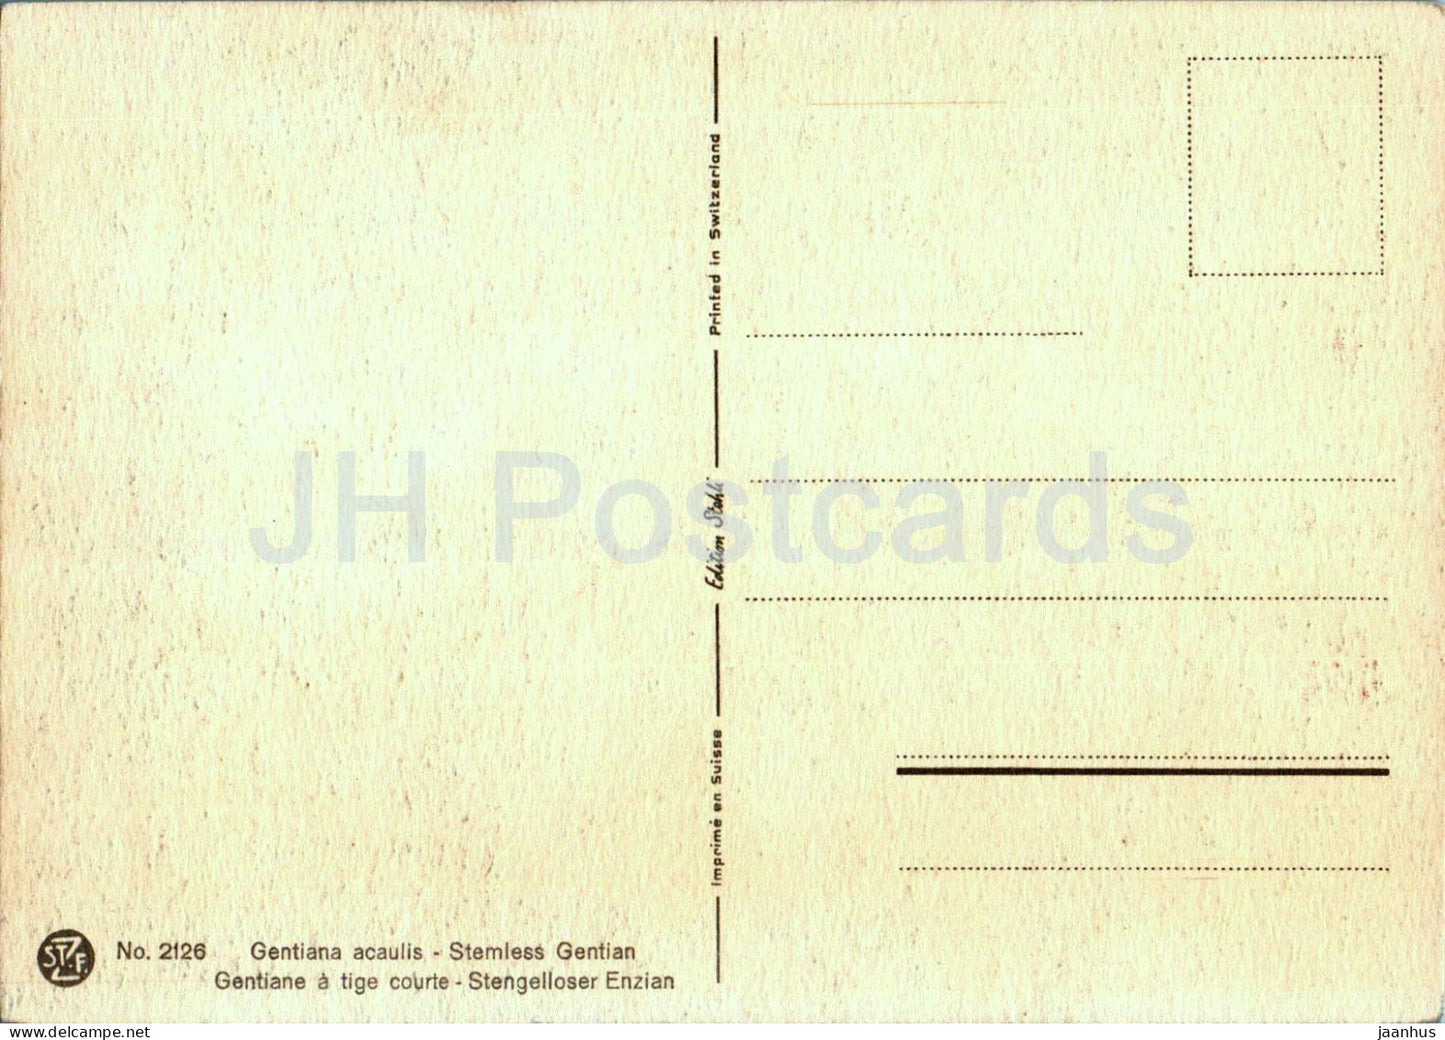 Gentiana acaulis - Gentiane sans tige - Stengelloser Enzian - 2126 - carte postale ancienne - fleurs - Suisse - inutilisé 